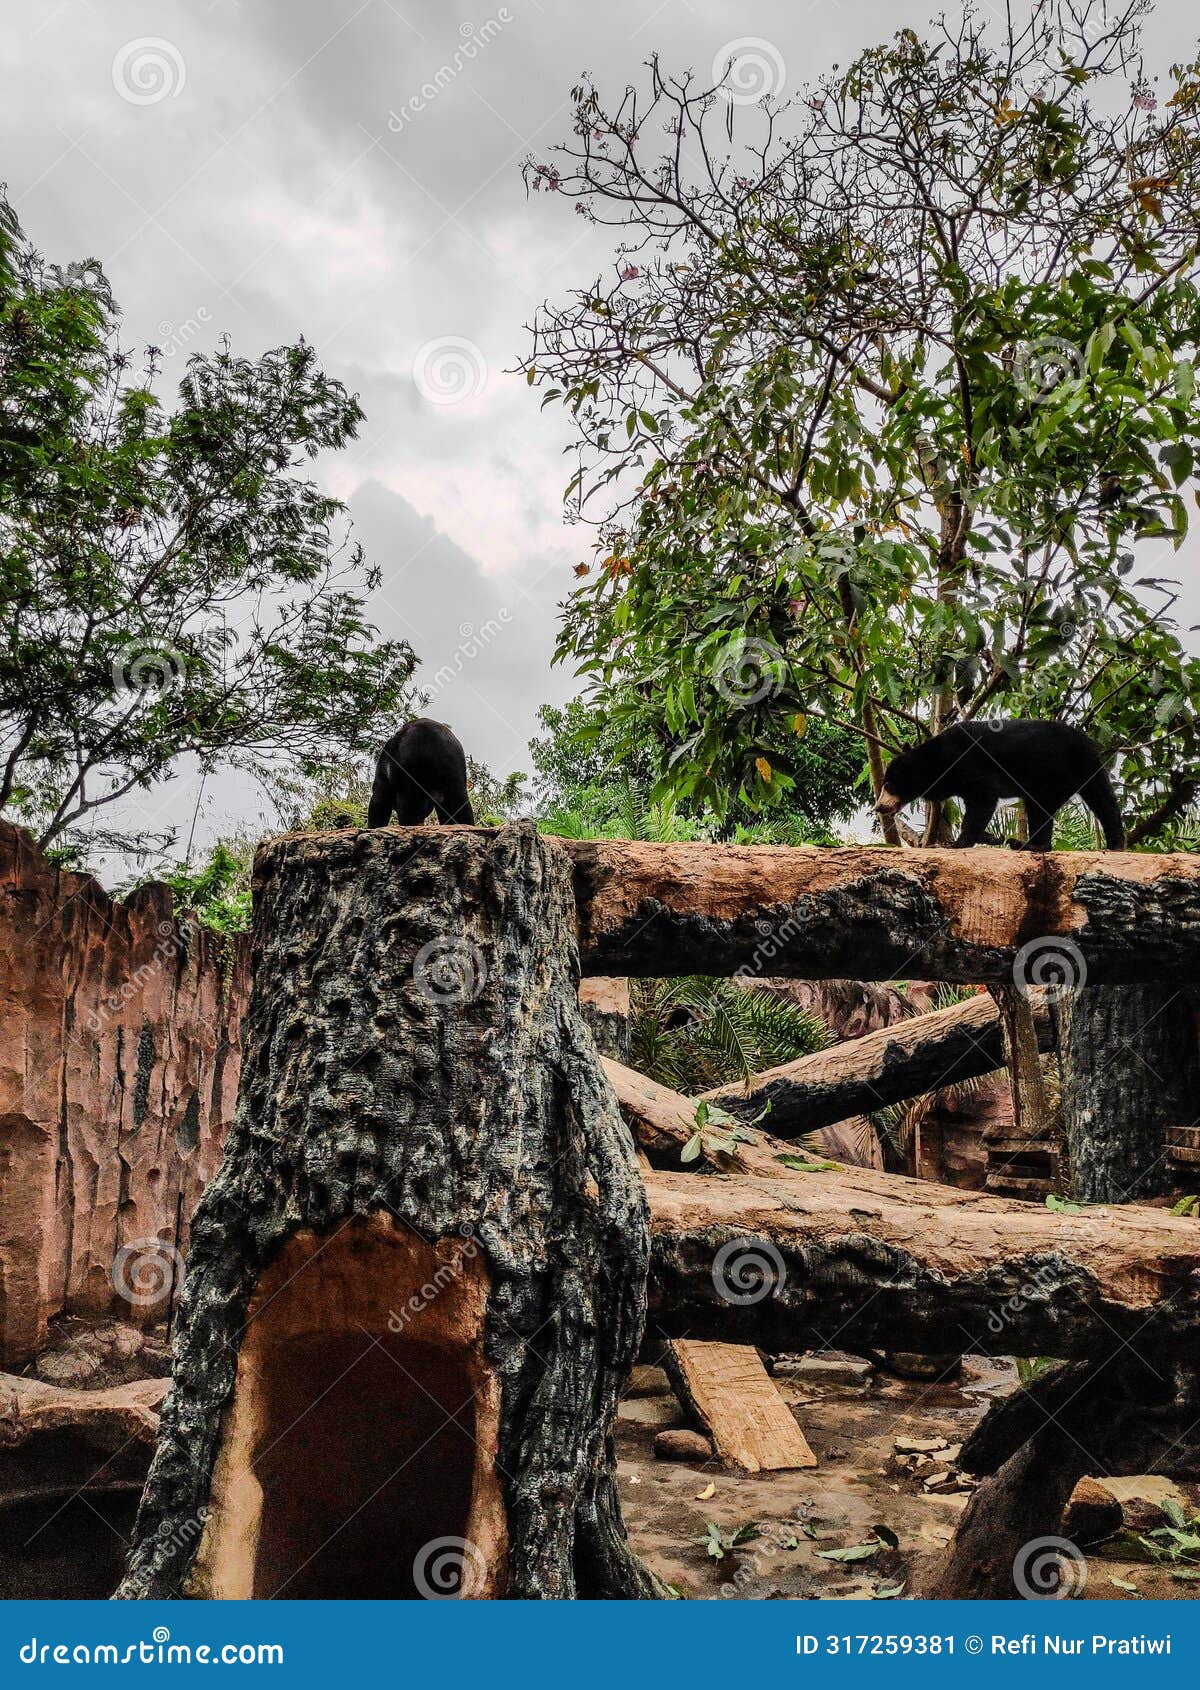 the florida black bear, scientifically known as ursus americanus floridanus, sits on a tree in the jatim park ii zoo, indonesia.